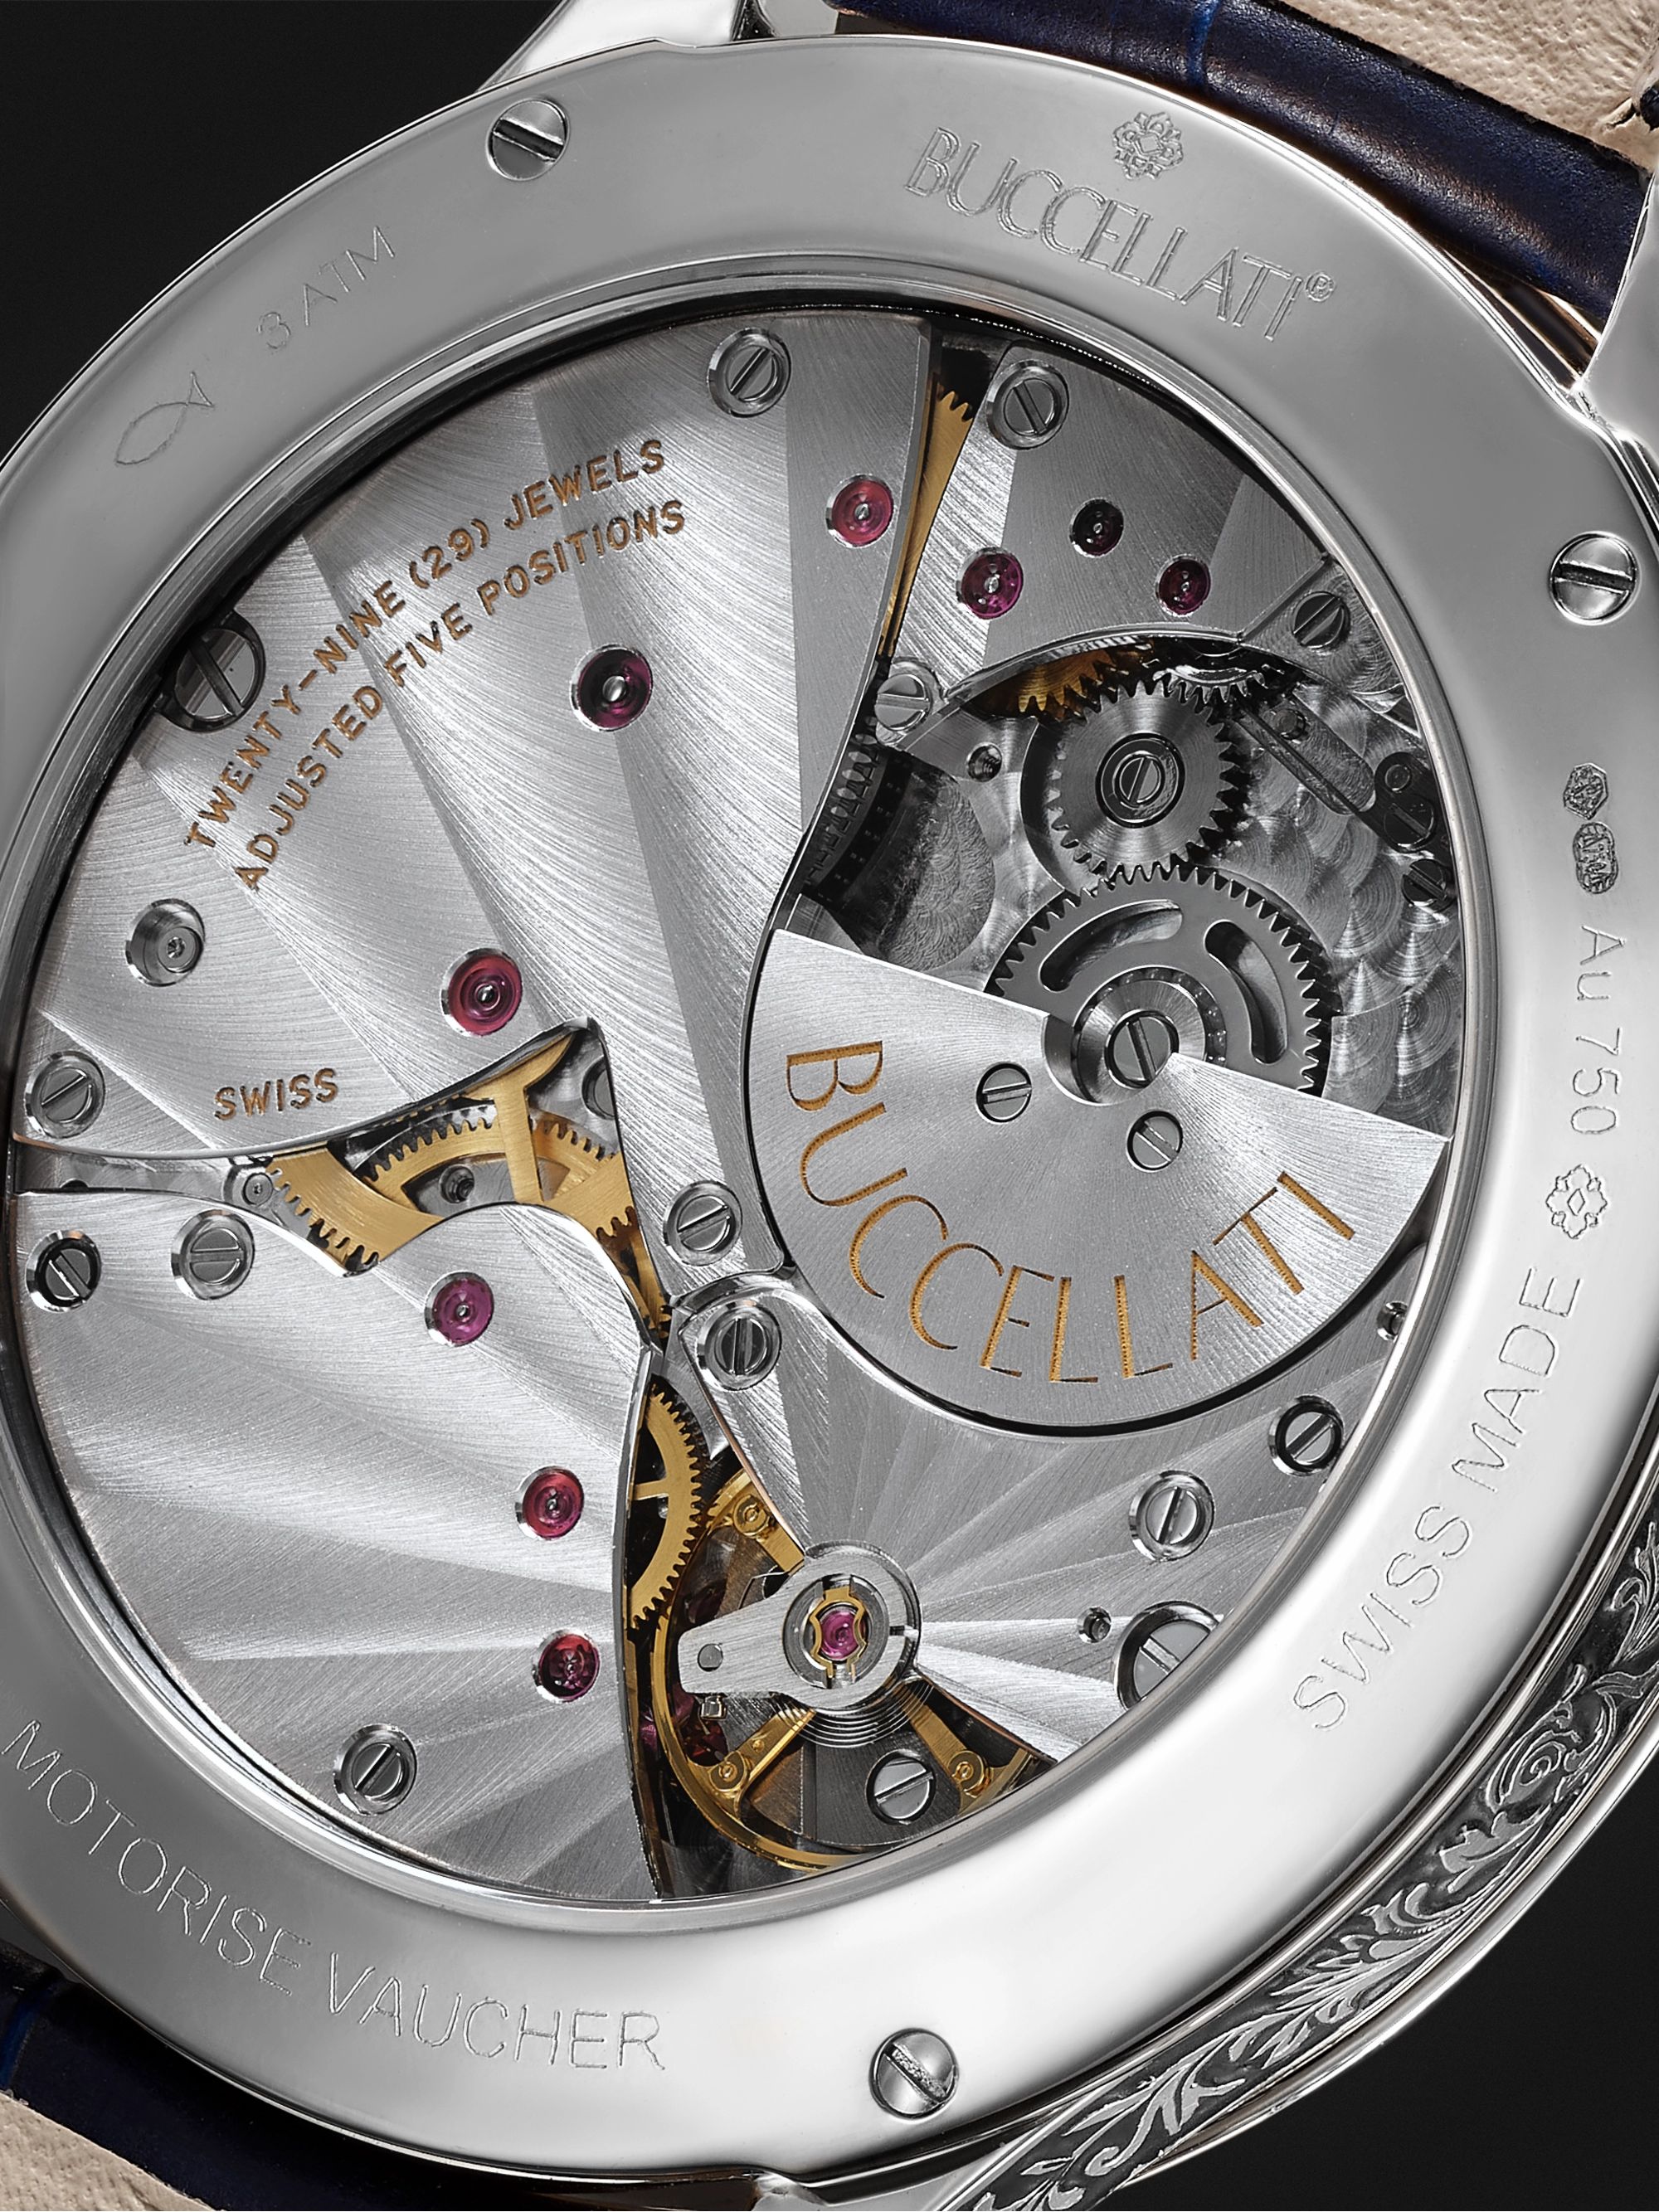 BUCCELLATI Ornatino Automatic 42mm 18-Karat White Gold and Croc-Effect Leather Watch, Ref. No. WAUMGE014262